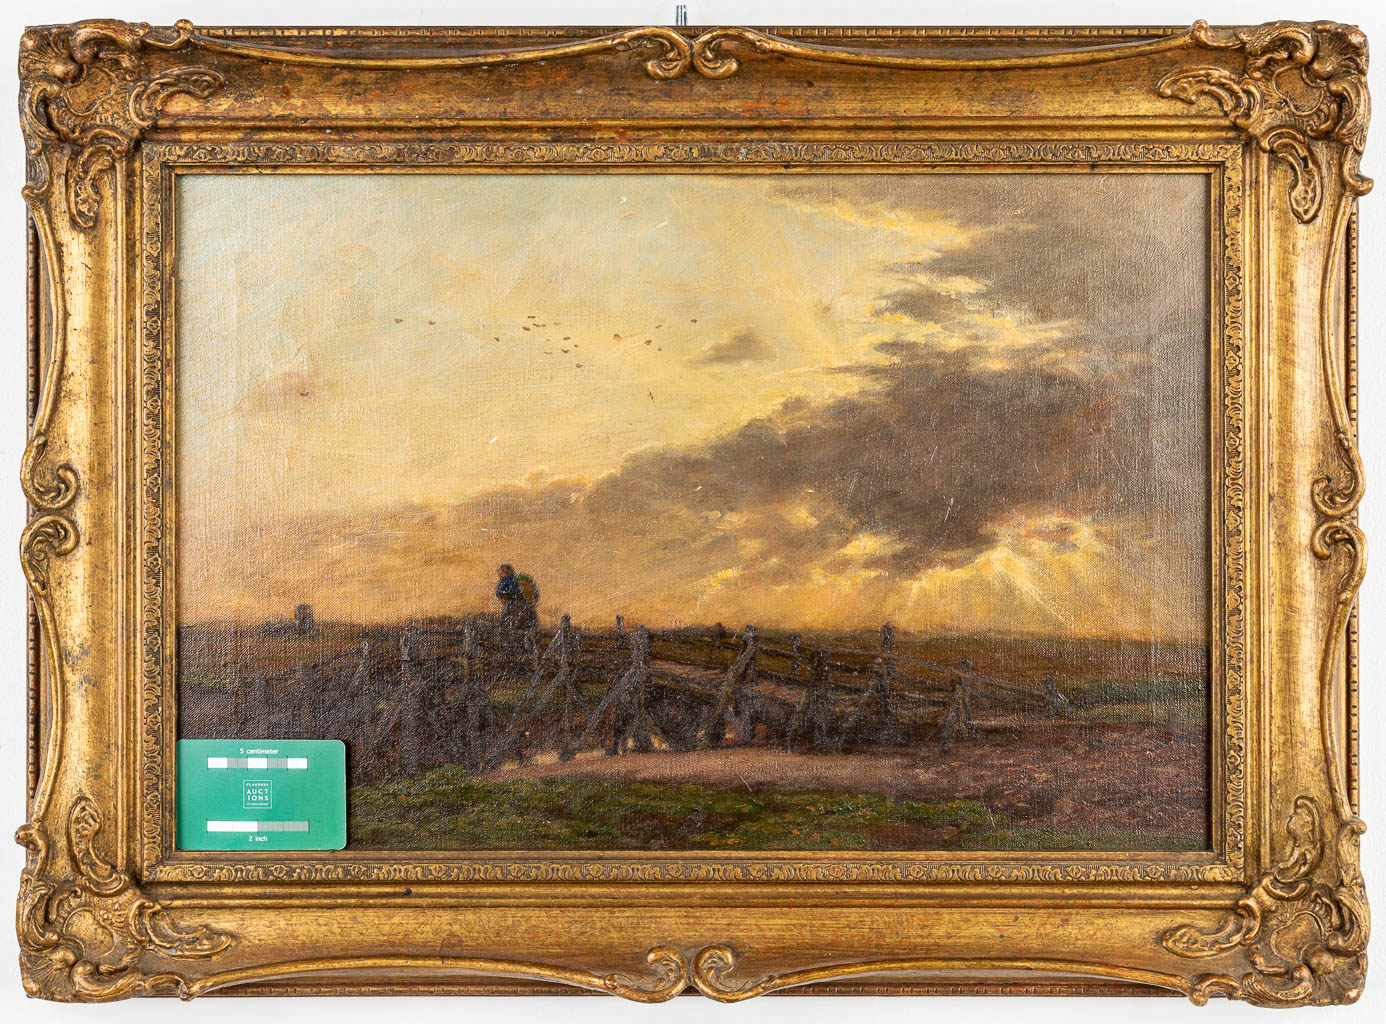 Jacob Henricus MARIS (1837-1899)(attr.) a landscape with figurine at dawn, oil on canvas. (54 x 36 cm)